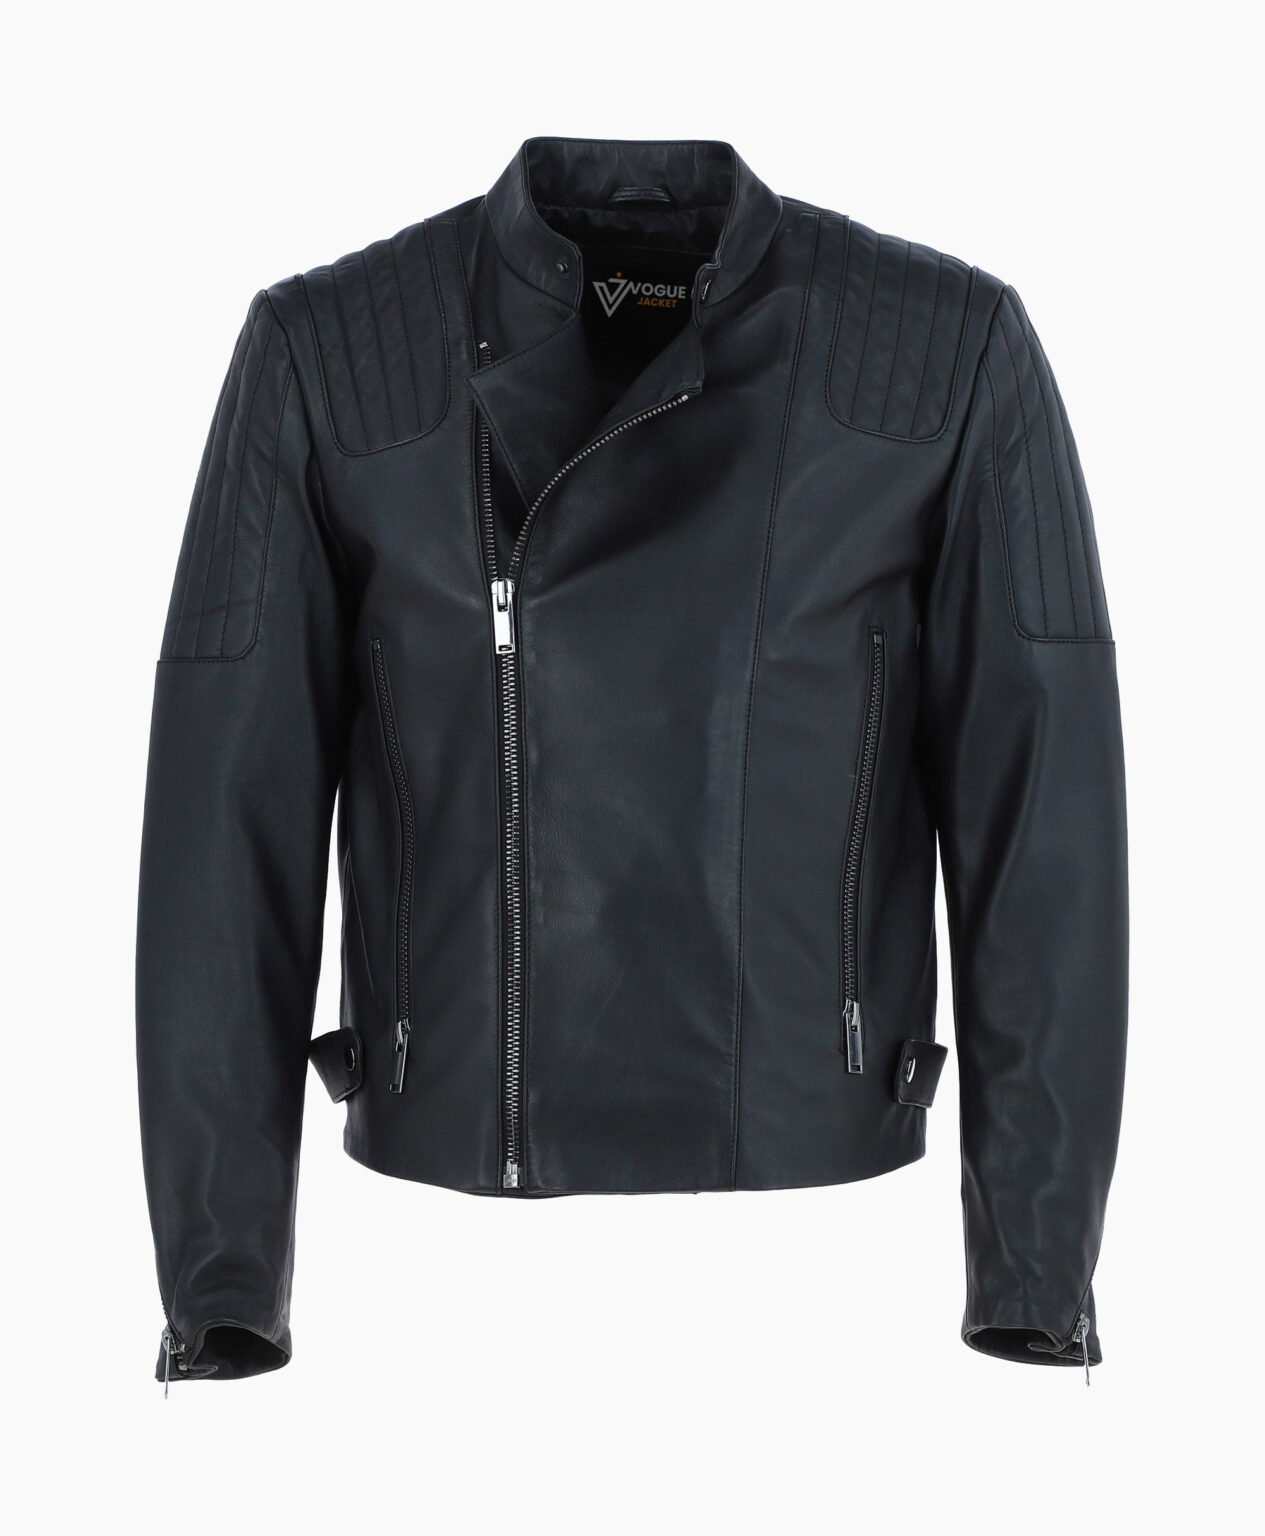 vogue-jacket-leather-biker-jacket-black-charleston-image200